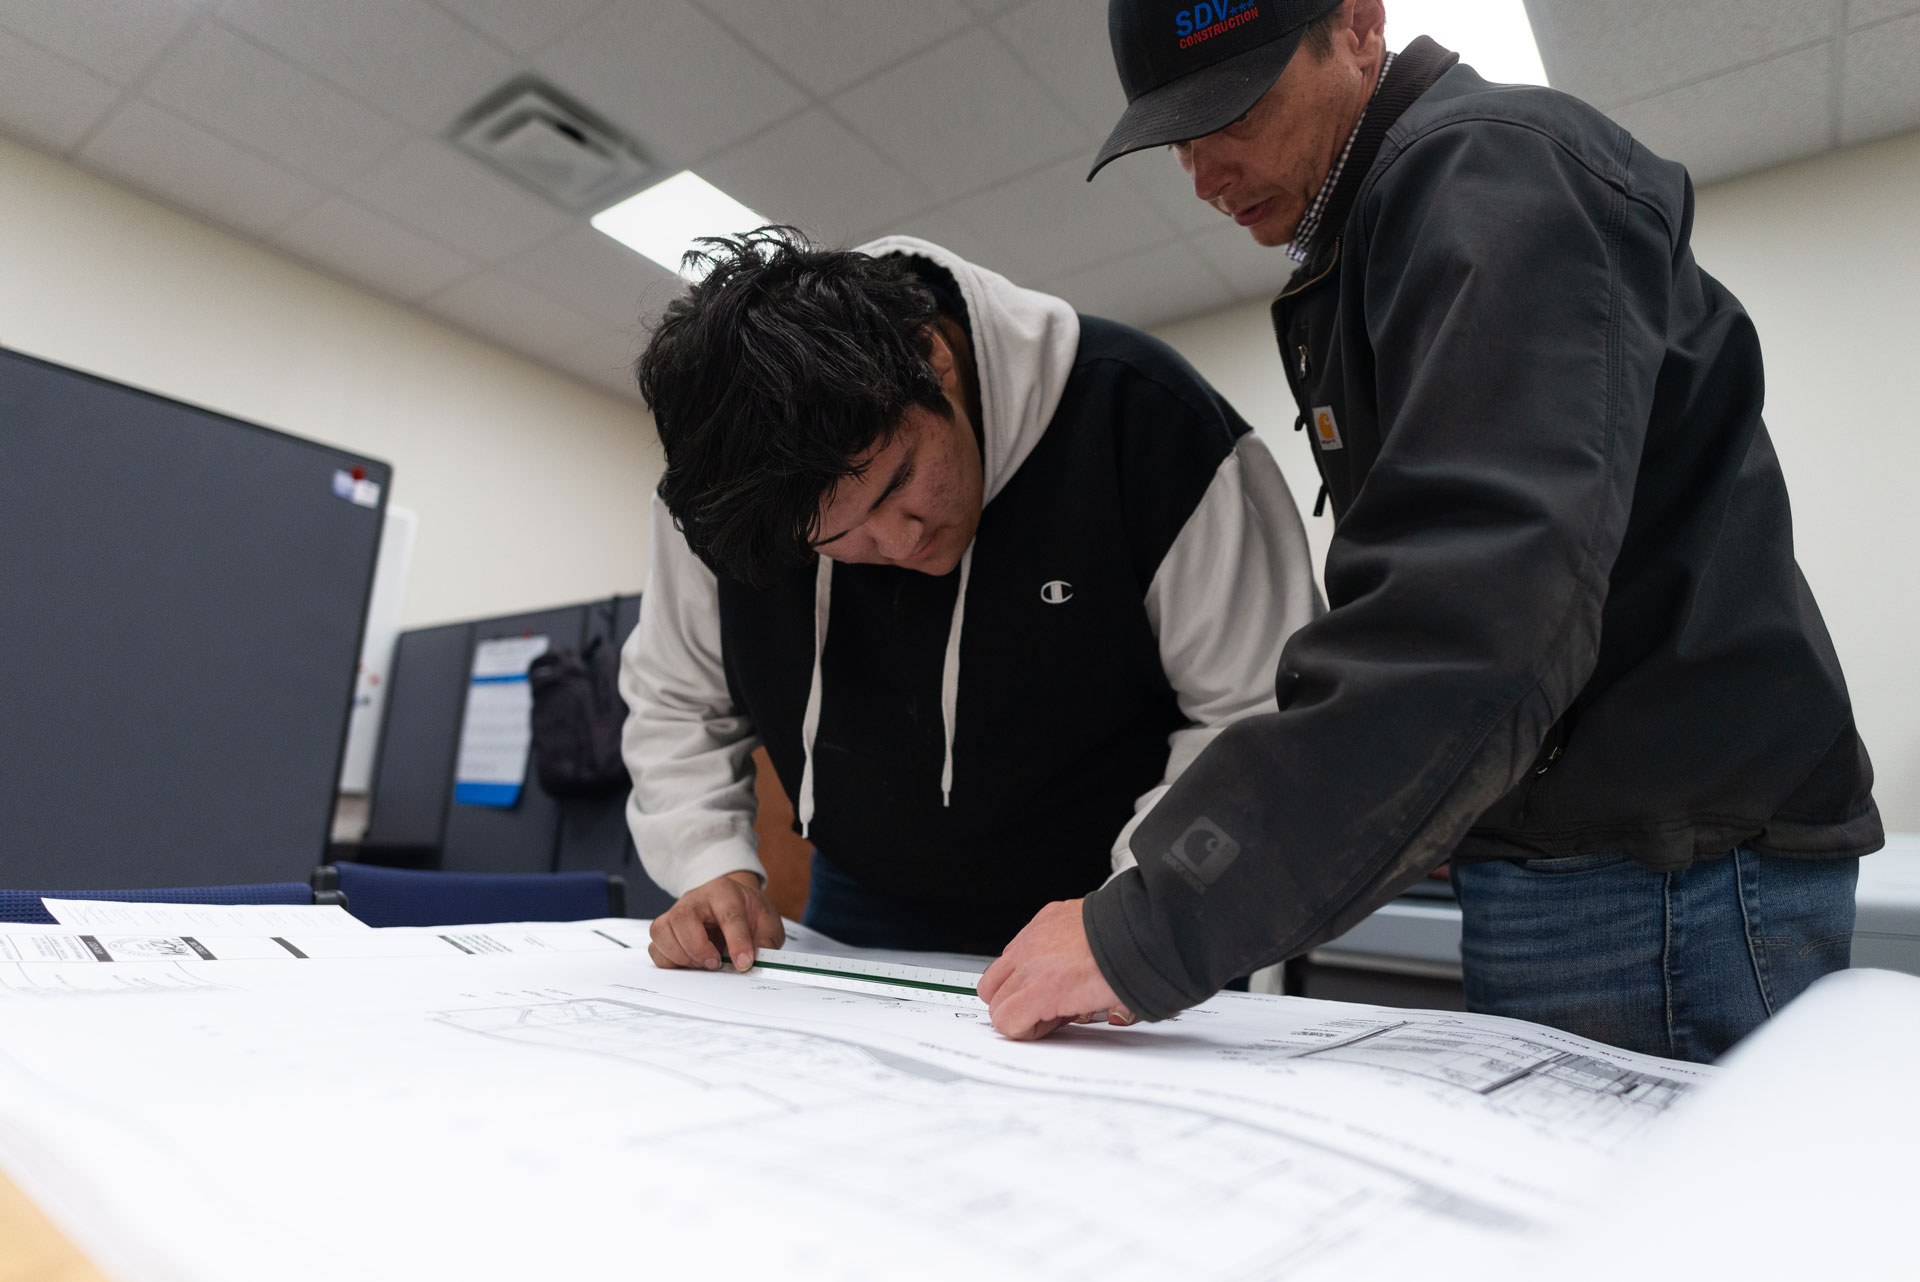 Mentor guiding mentee on creating blueprints before construction.